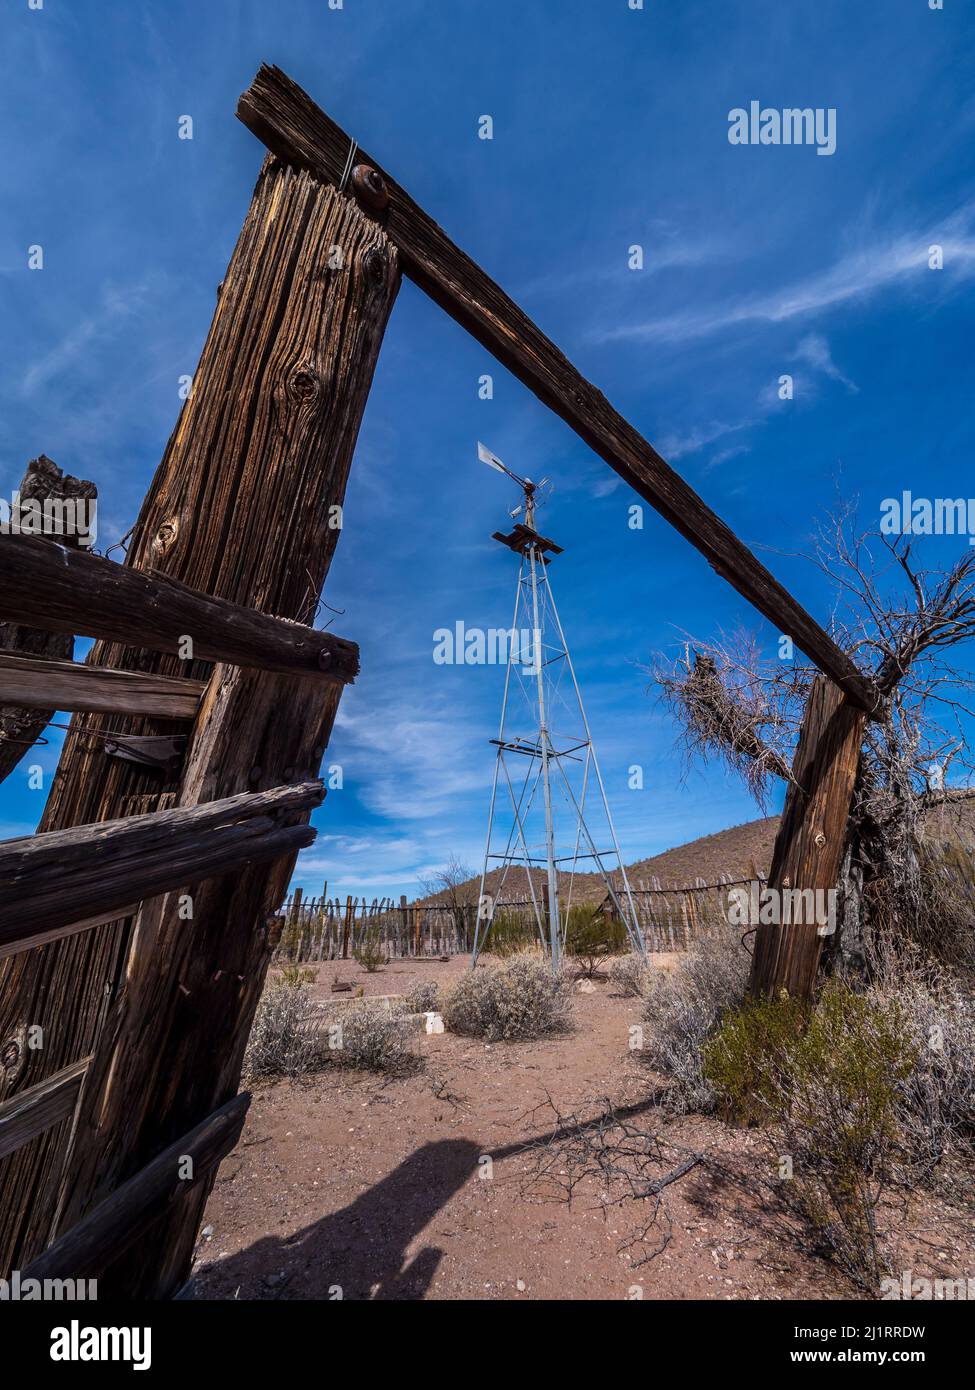 Windmill, Pozo Nuevo line camp, Pozo Nuevo Road, Organ Pipe Cactus National Monument, Arizona. Stock Photo